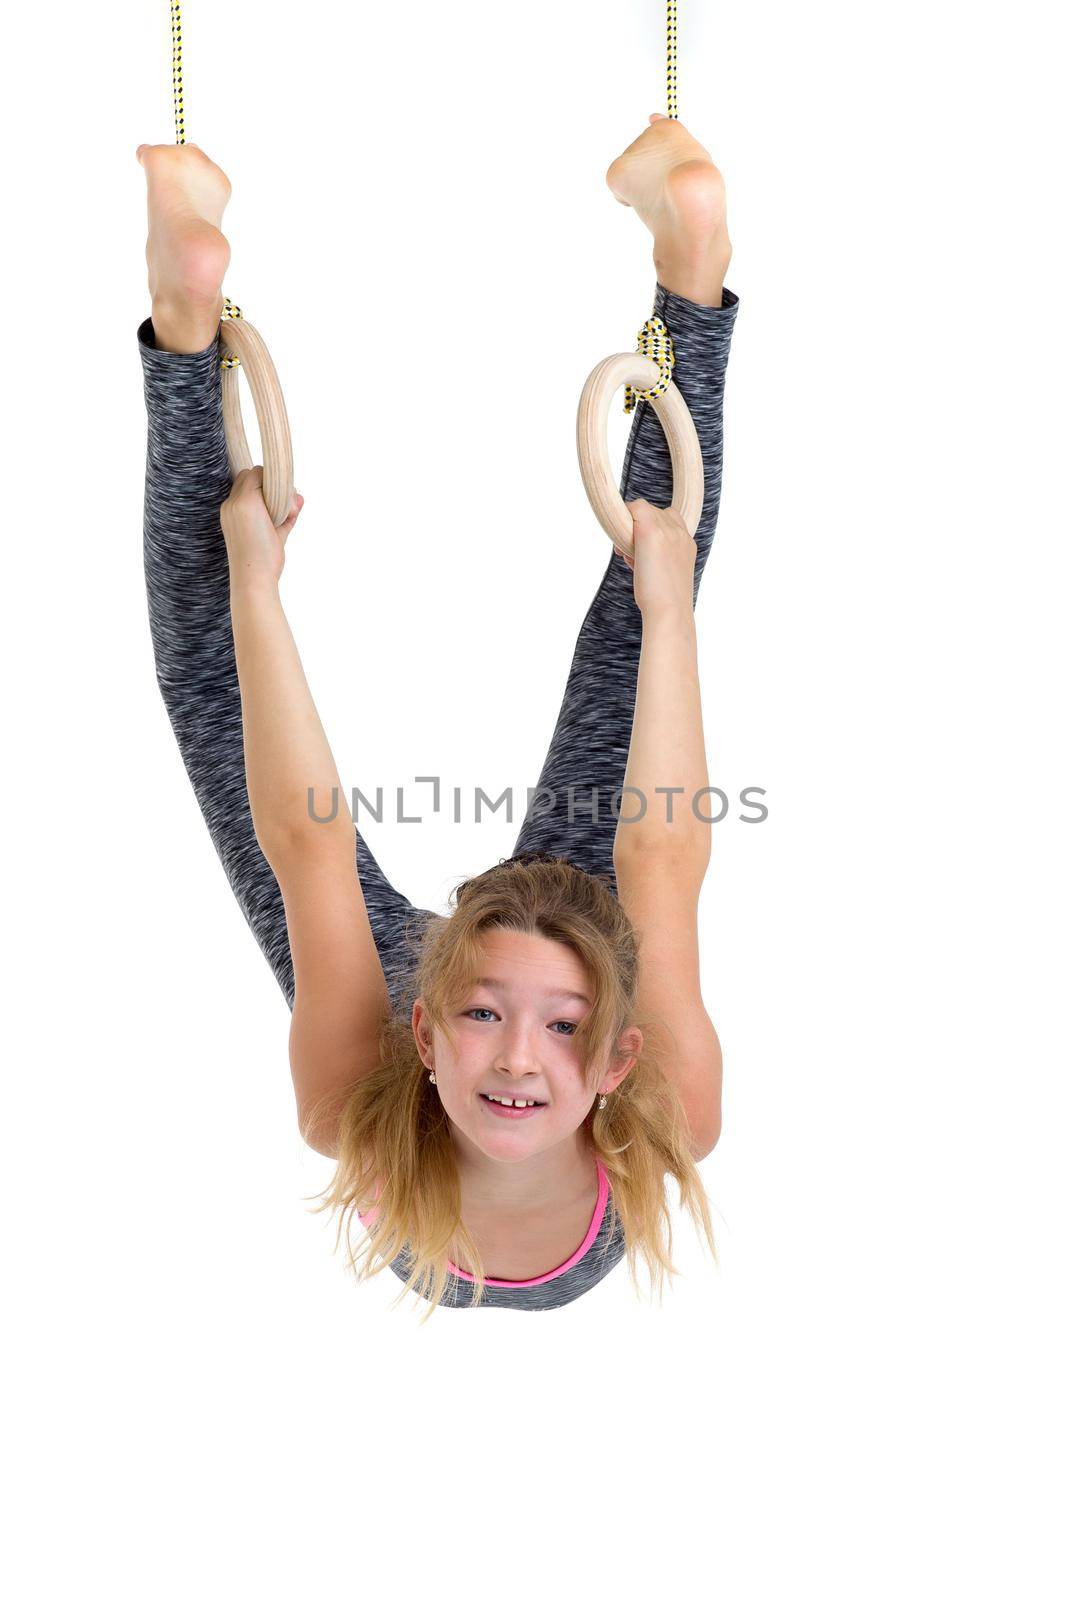 Teenage girl exercising on gymnastic rings by kolesnikov_studio